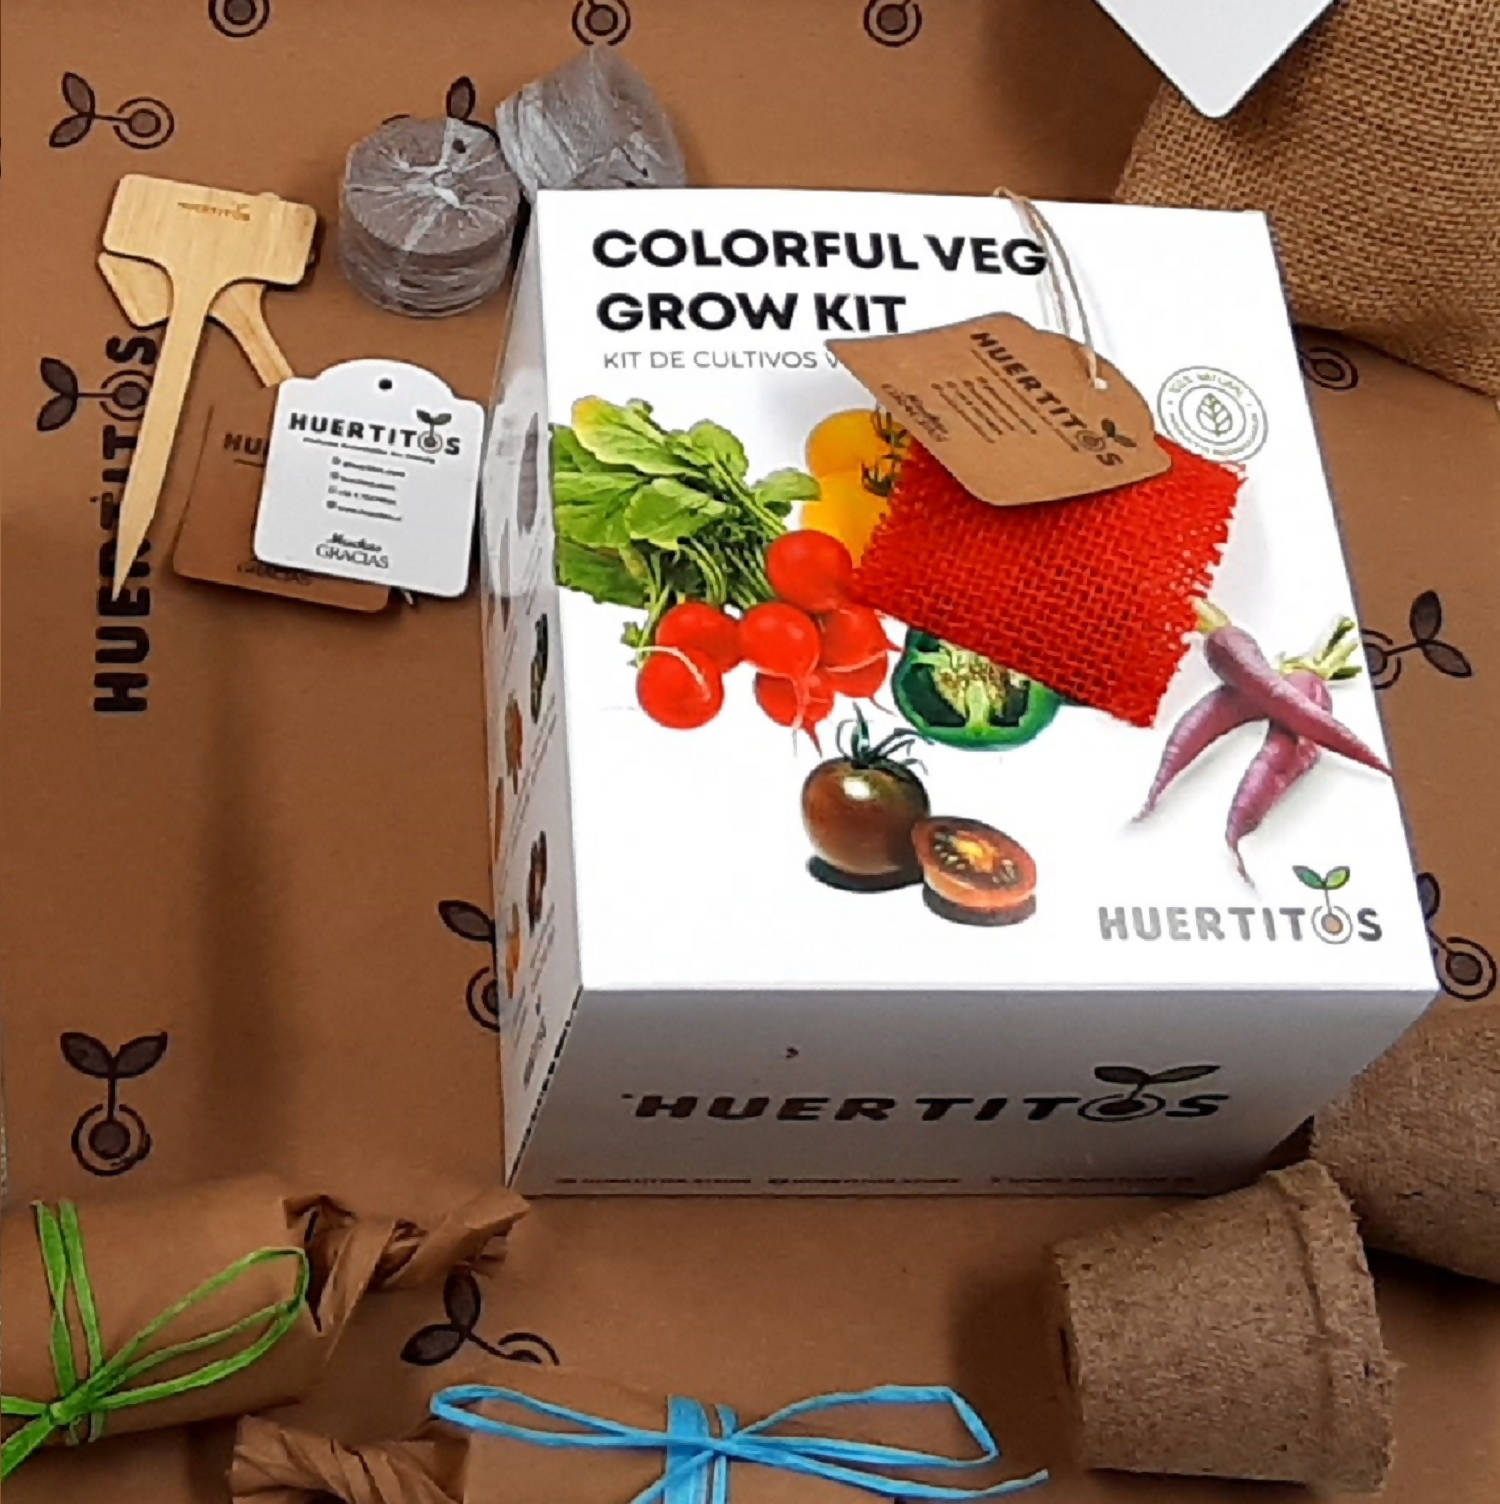 Kit de cultivo Verduras Coloridas (Colorful Veg GROW KIT)